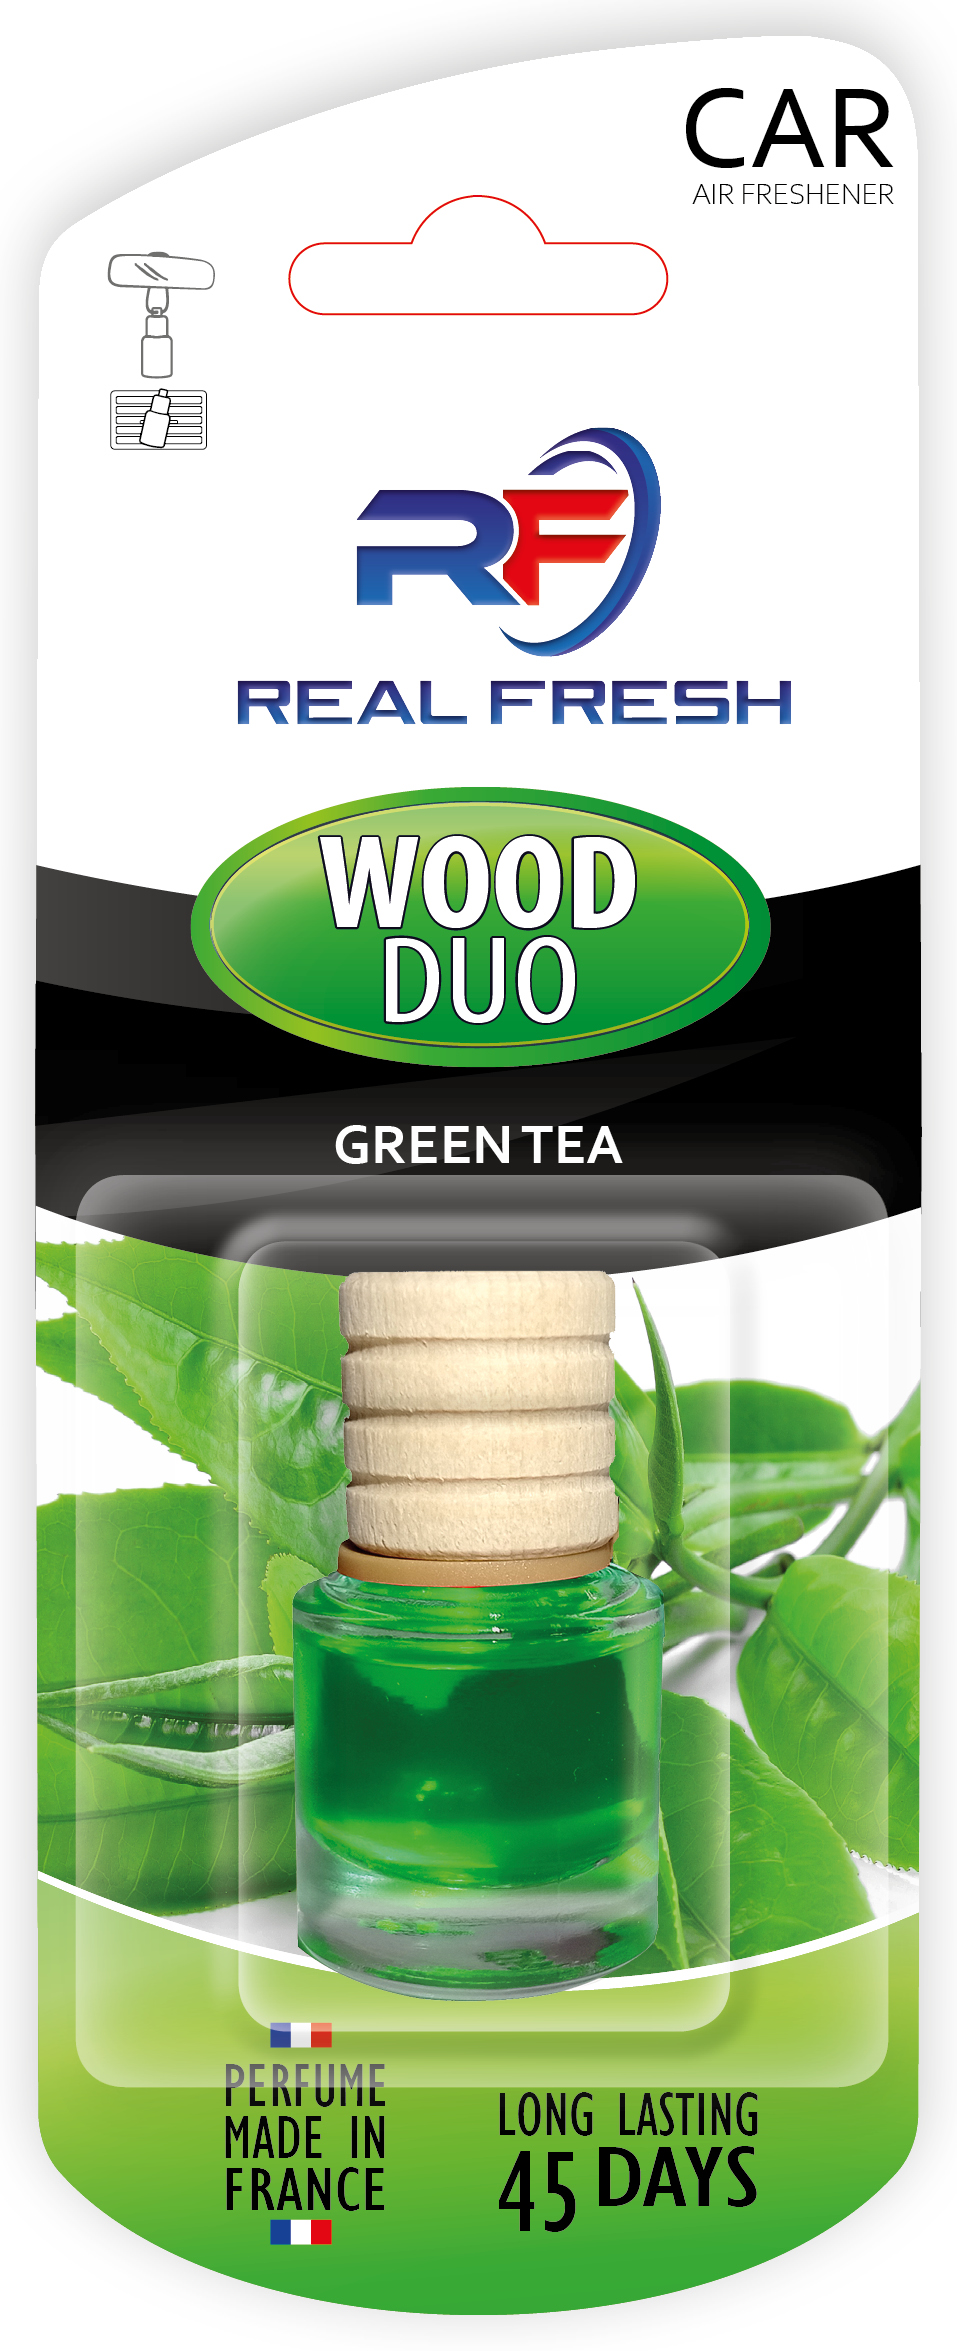 WOOD DUO Green Tea Image